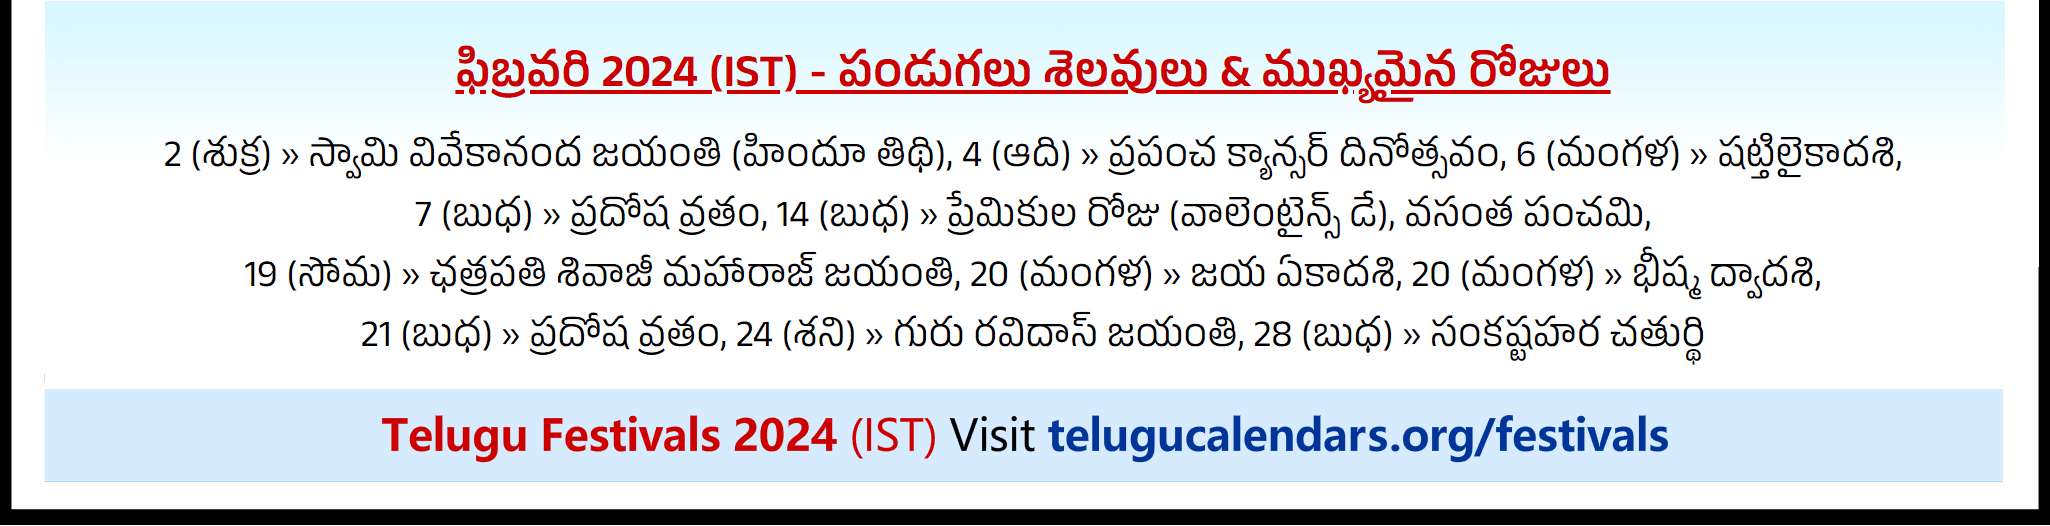 Telugu Festivals 2024 February San Francisco